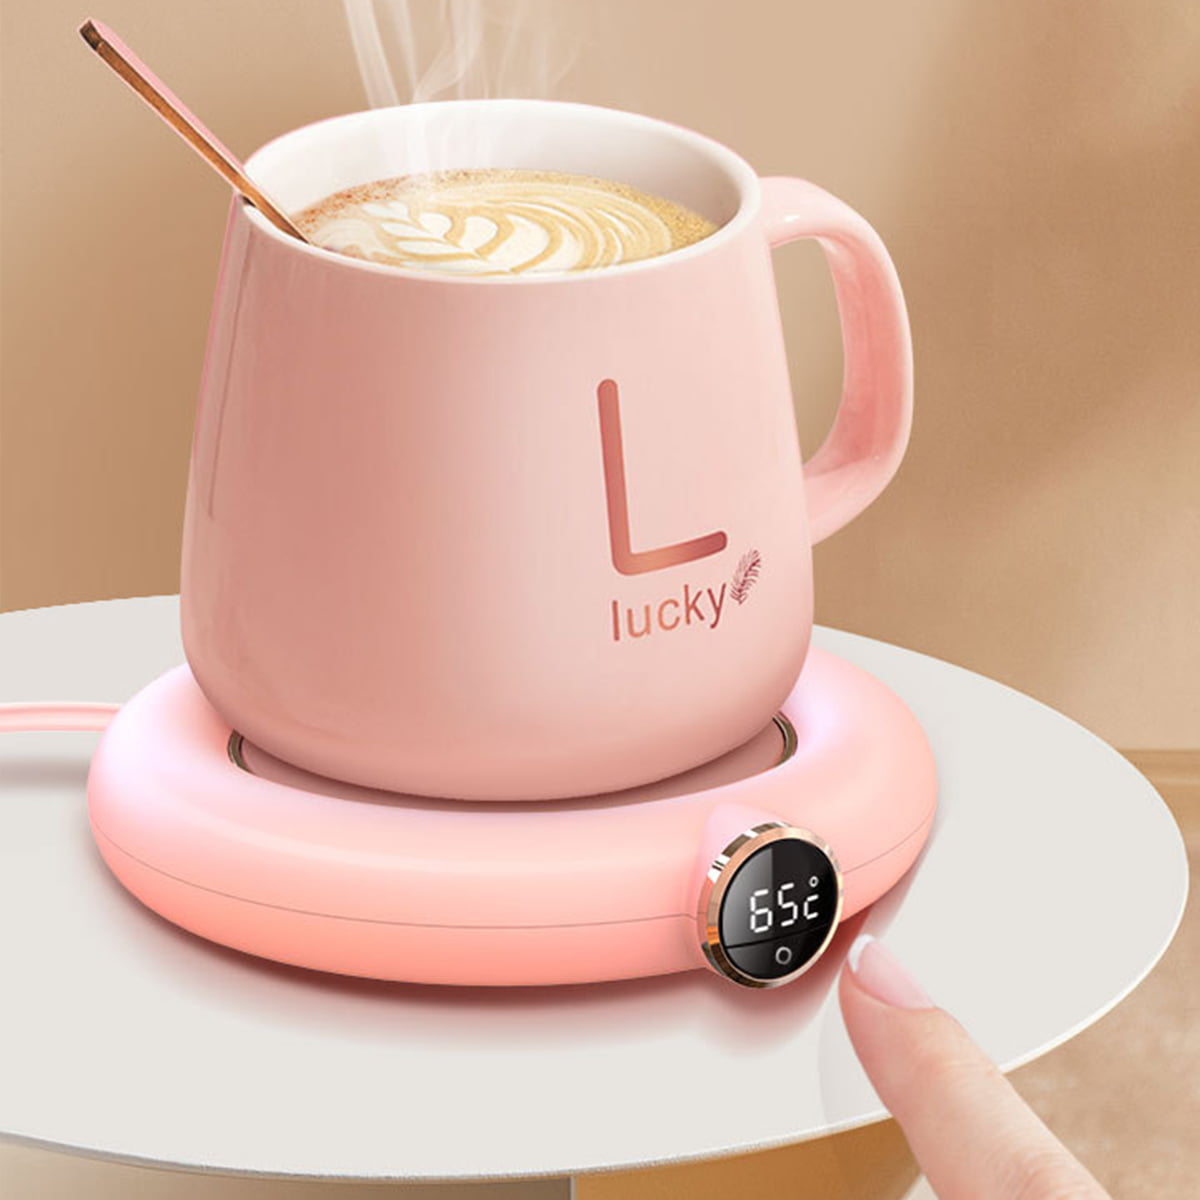 Niyofa Electric Coffee Mug Warmer 5V 10W USB Rechargeable Coffee Cup Heater  Port